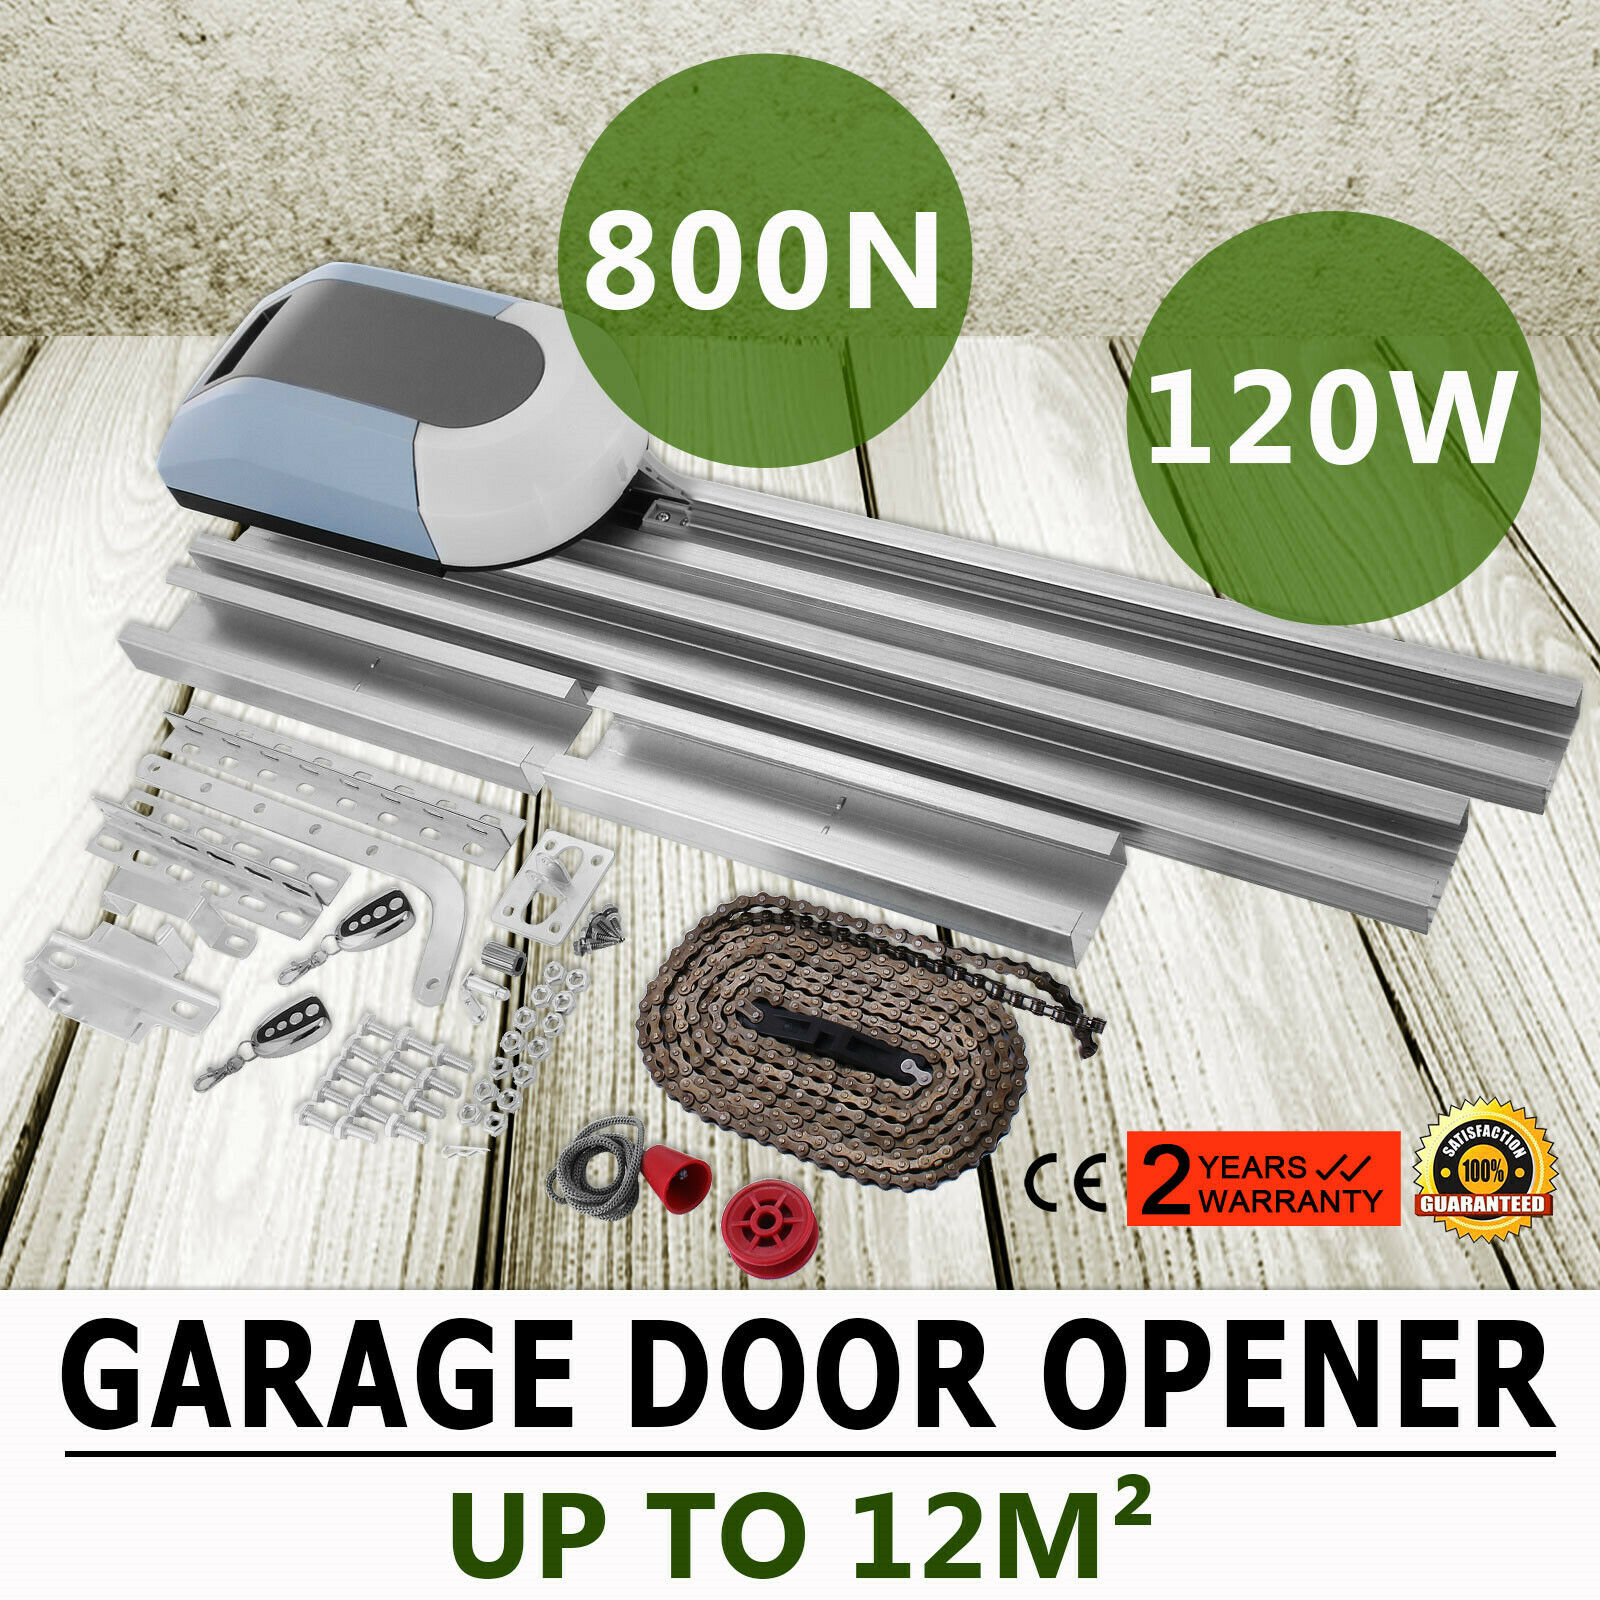 120W Remote Control KITGARN 800N Garage Door Opener Operator Full Kit Electric Automatic Gate Openers Sliding Gates Kit